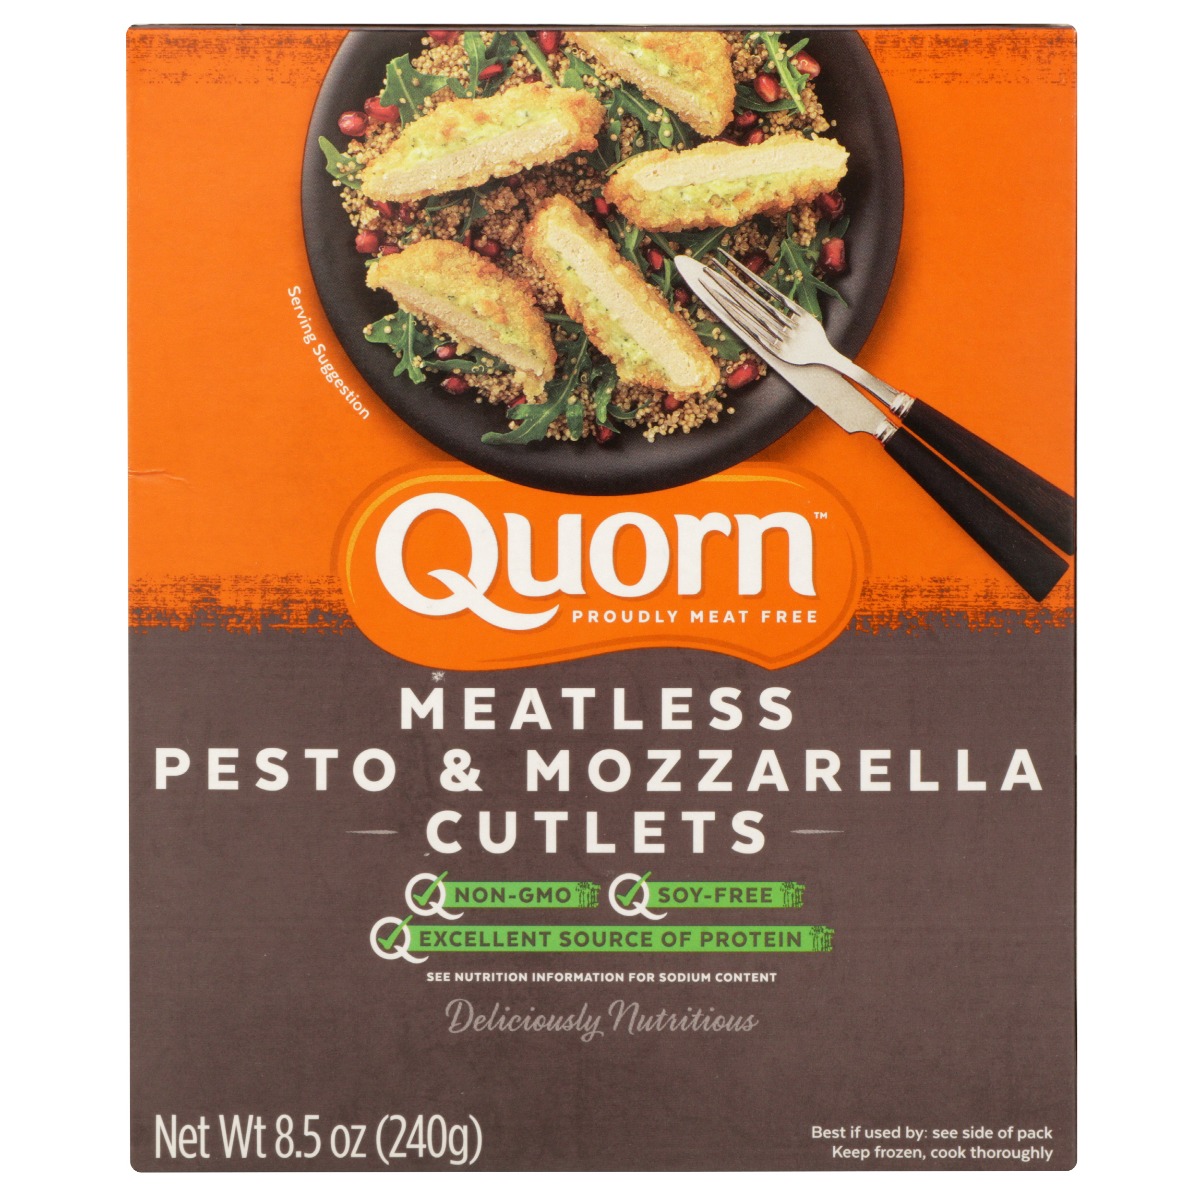 Pesto & Mozzarella Chicken Cutlets - 833735001871